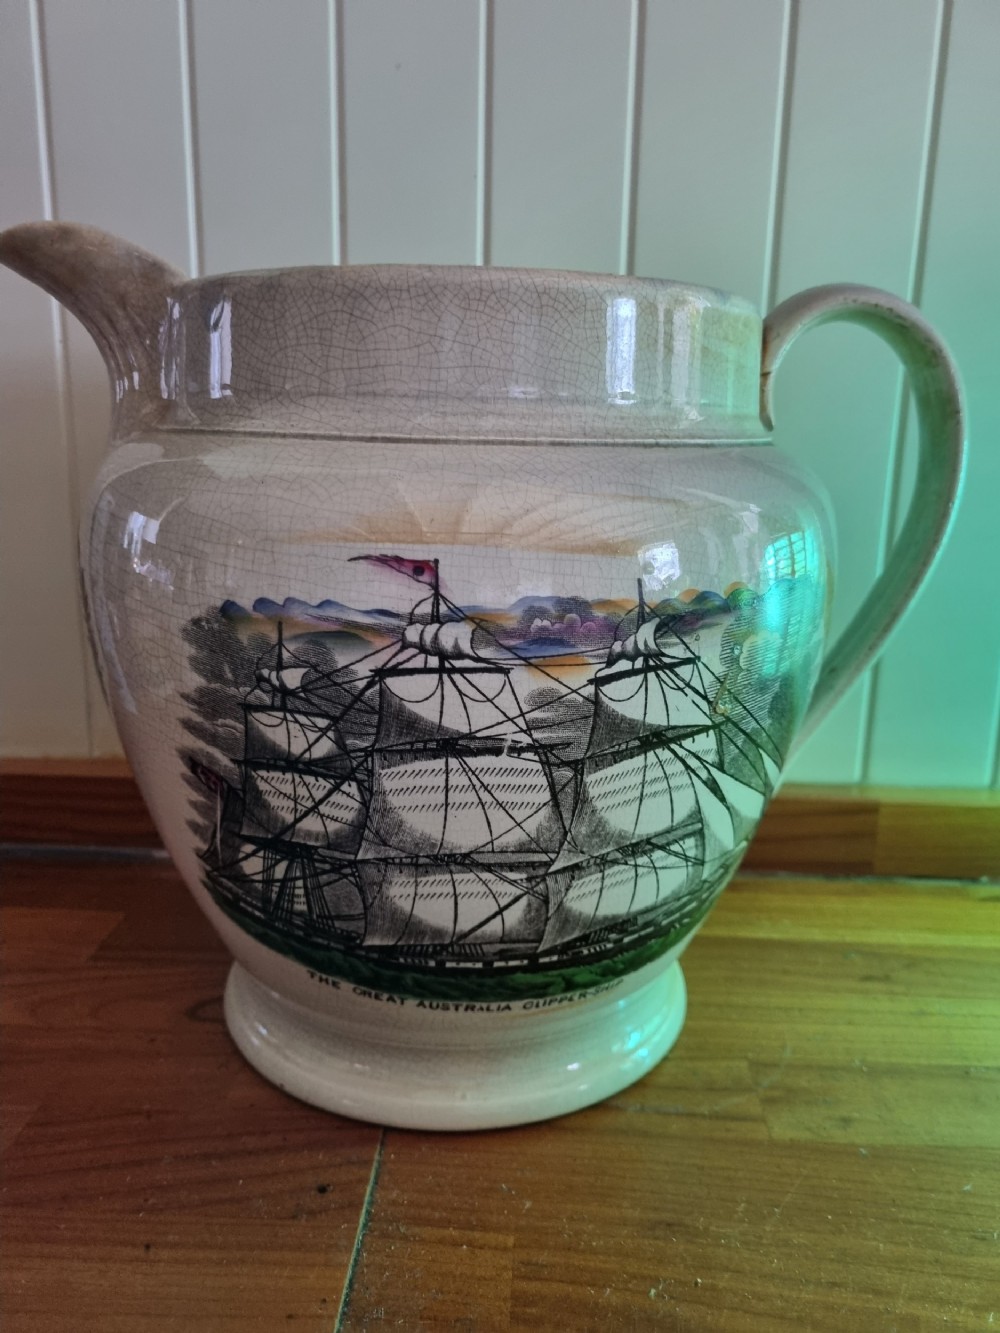 massive antique sunderland lustre jug with shipping scenes